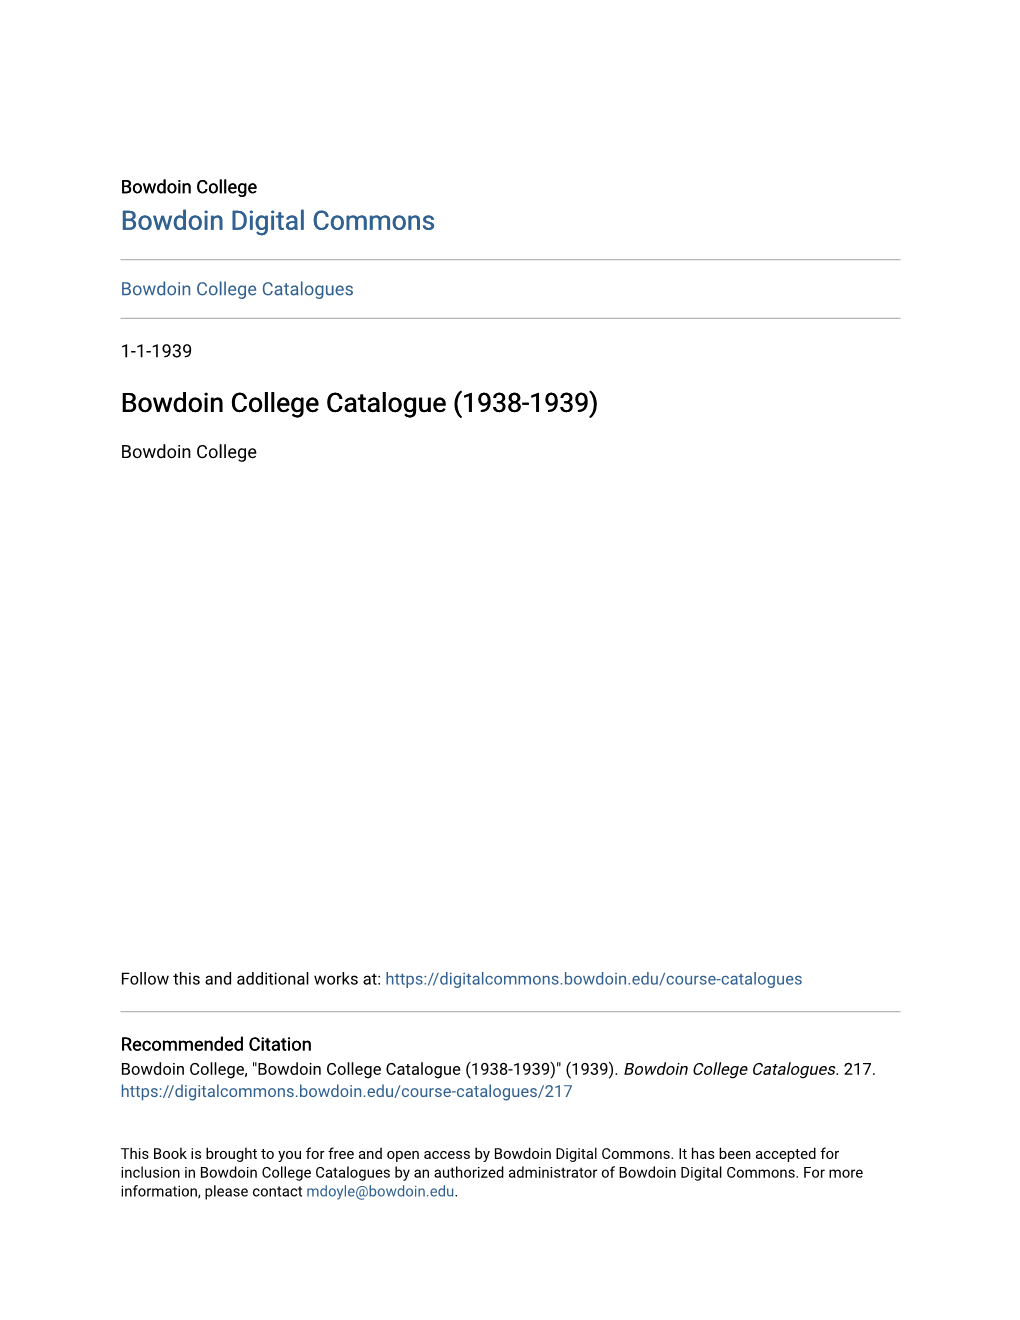 Bowdoin College Catalogue (1938-1939)